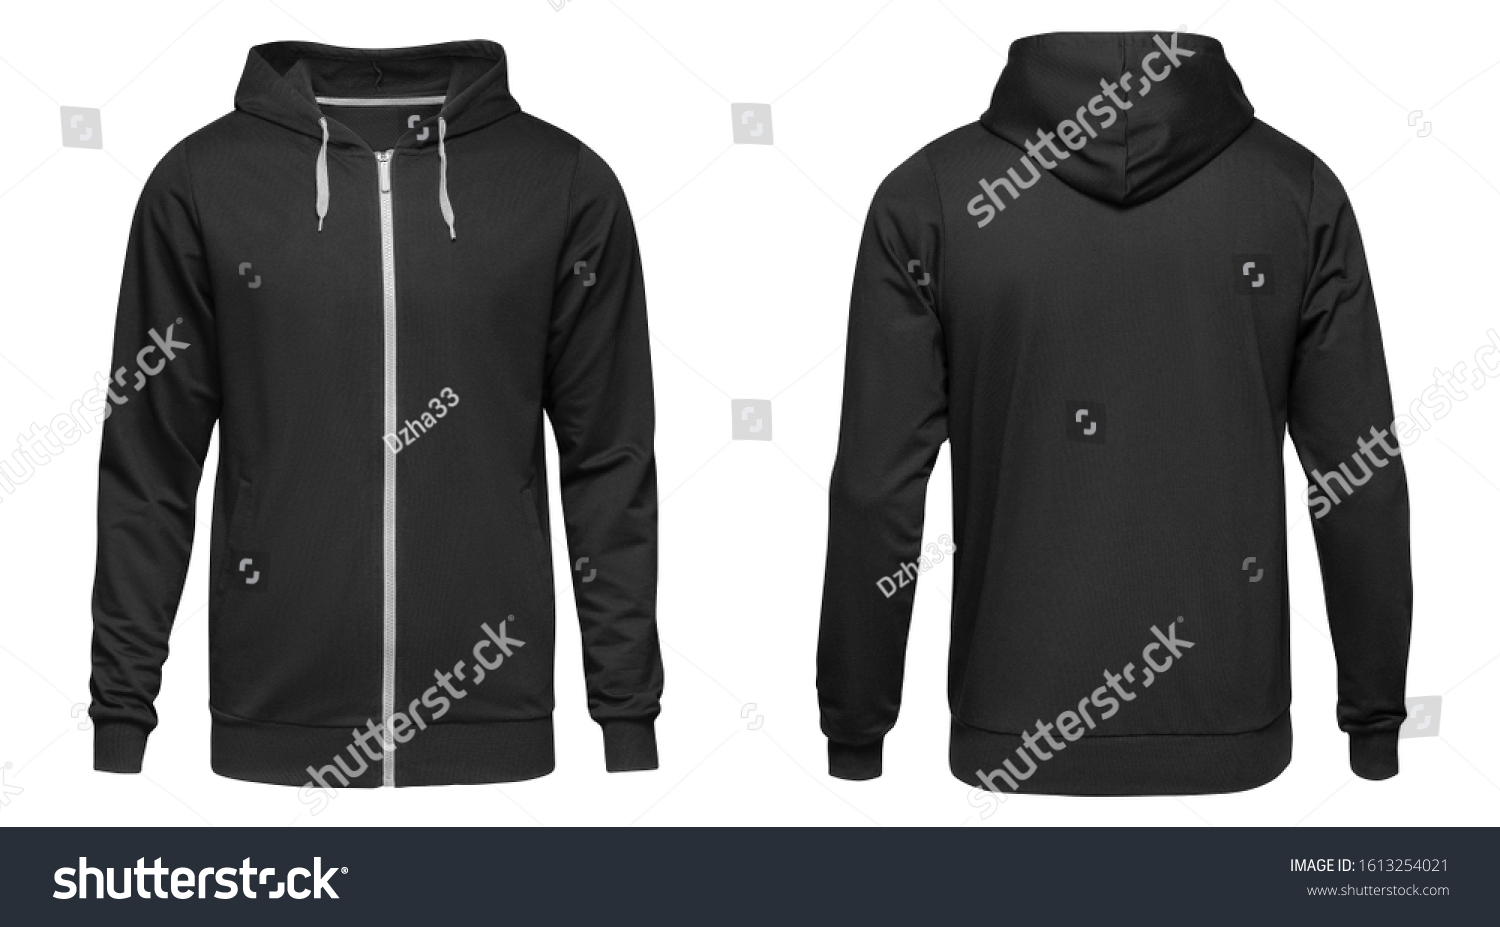 36 Black hoodie no pockets Images, Stock Photos & Vectors | Shutterstock